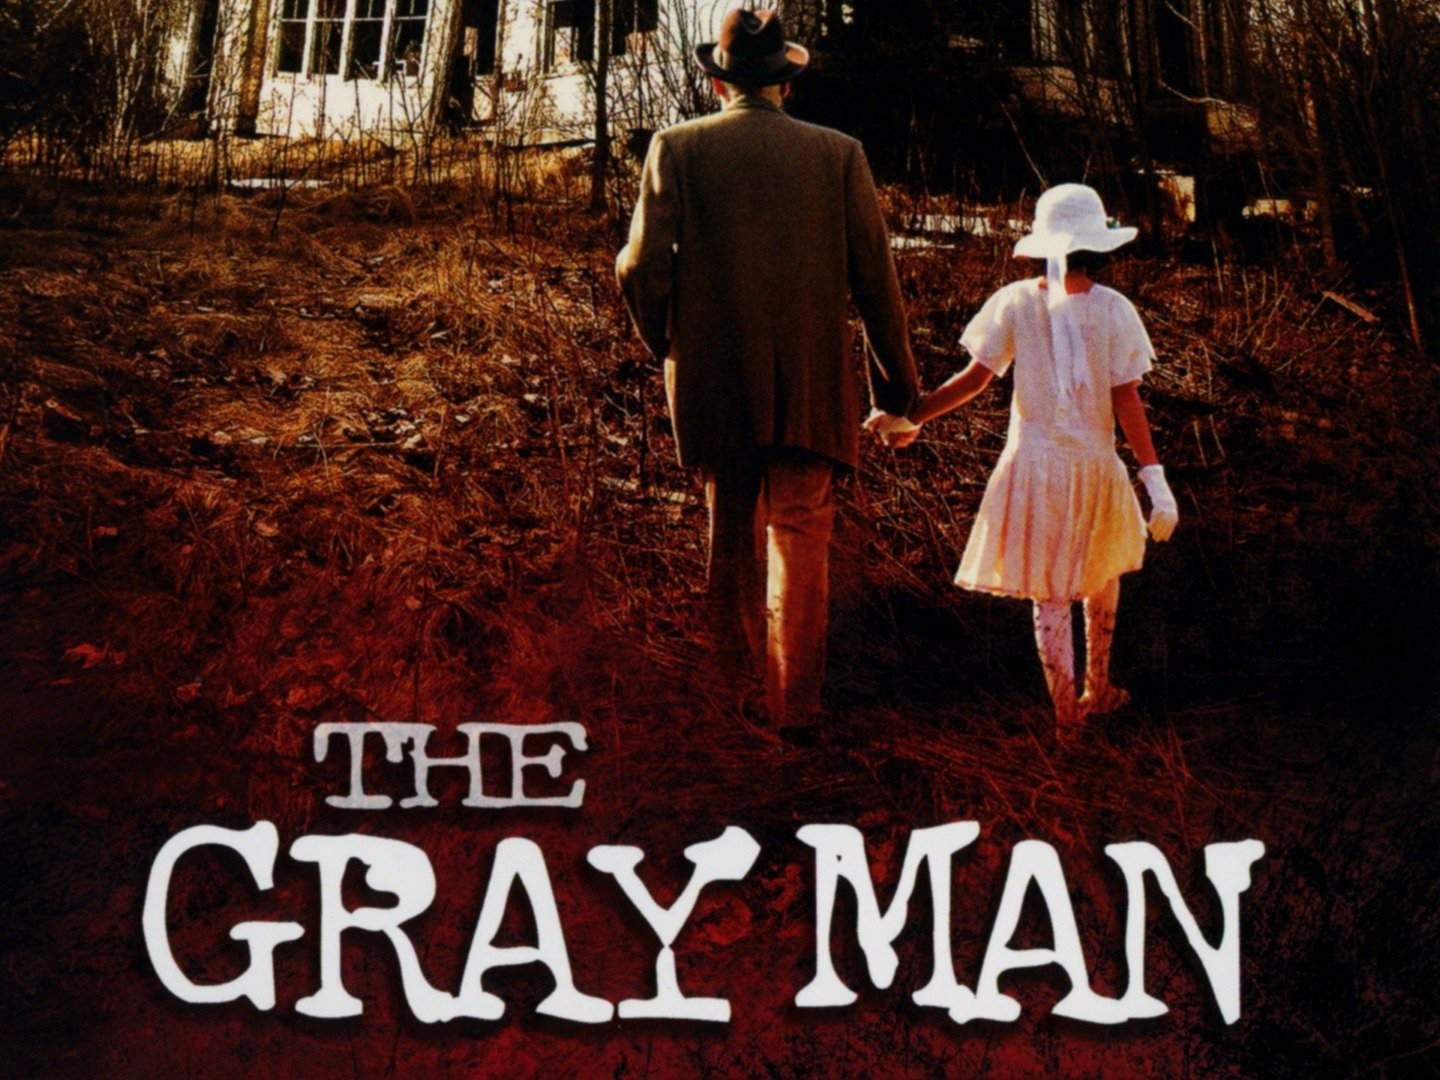 Pixel PLUS - The Gray Man Action/Thriller 6.8/10 IMDb 50% Rotten